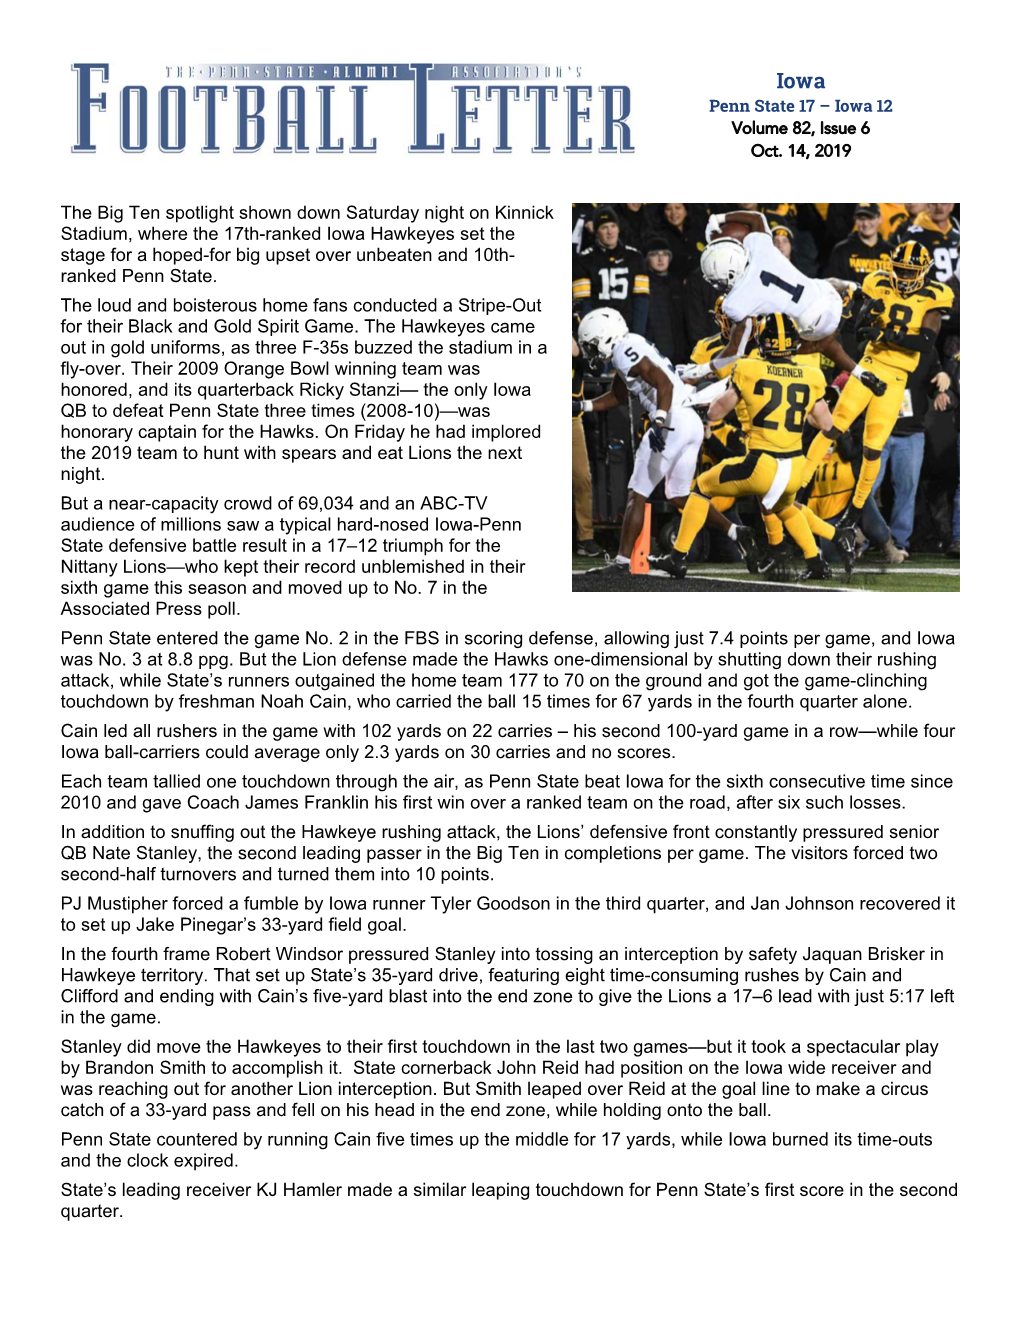 Iowa Penn State 17 – Iowa 12 Volume 82, Issue 6 Oct